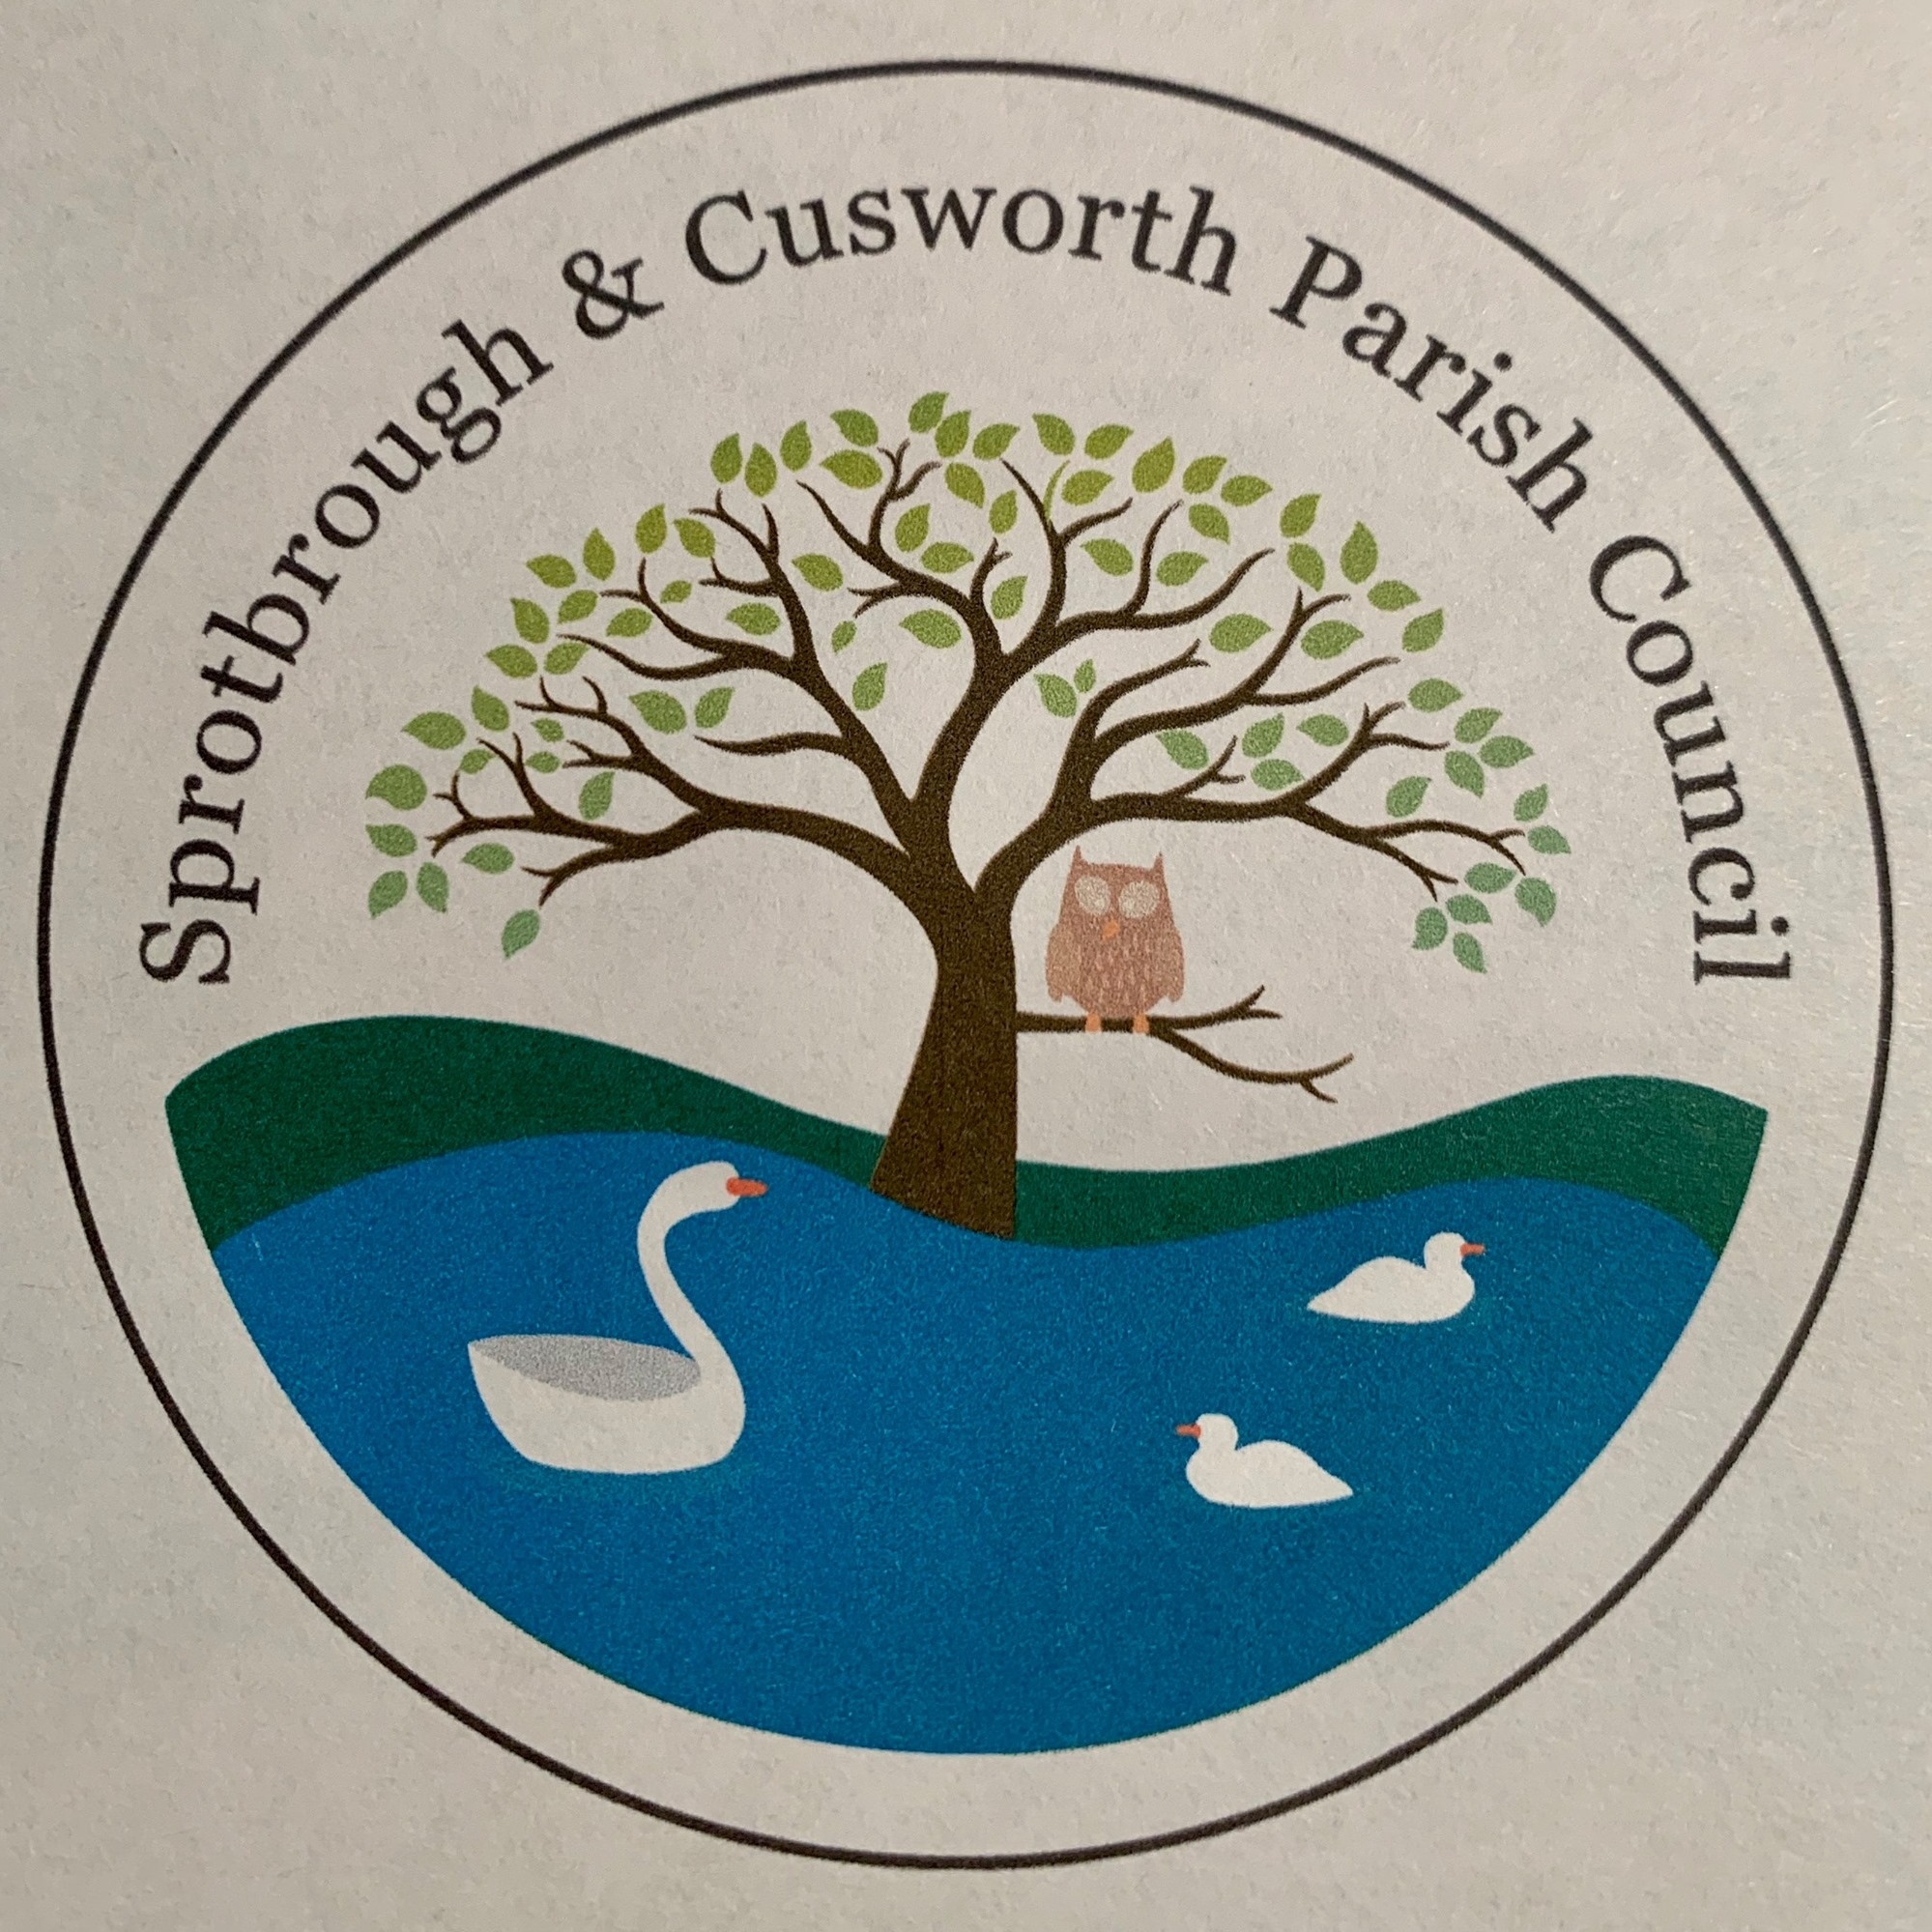 Sprotbrough & Cusworth Parish Council